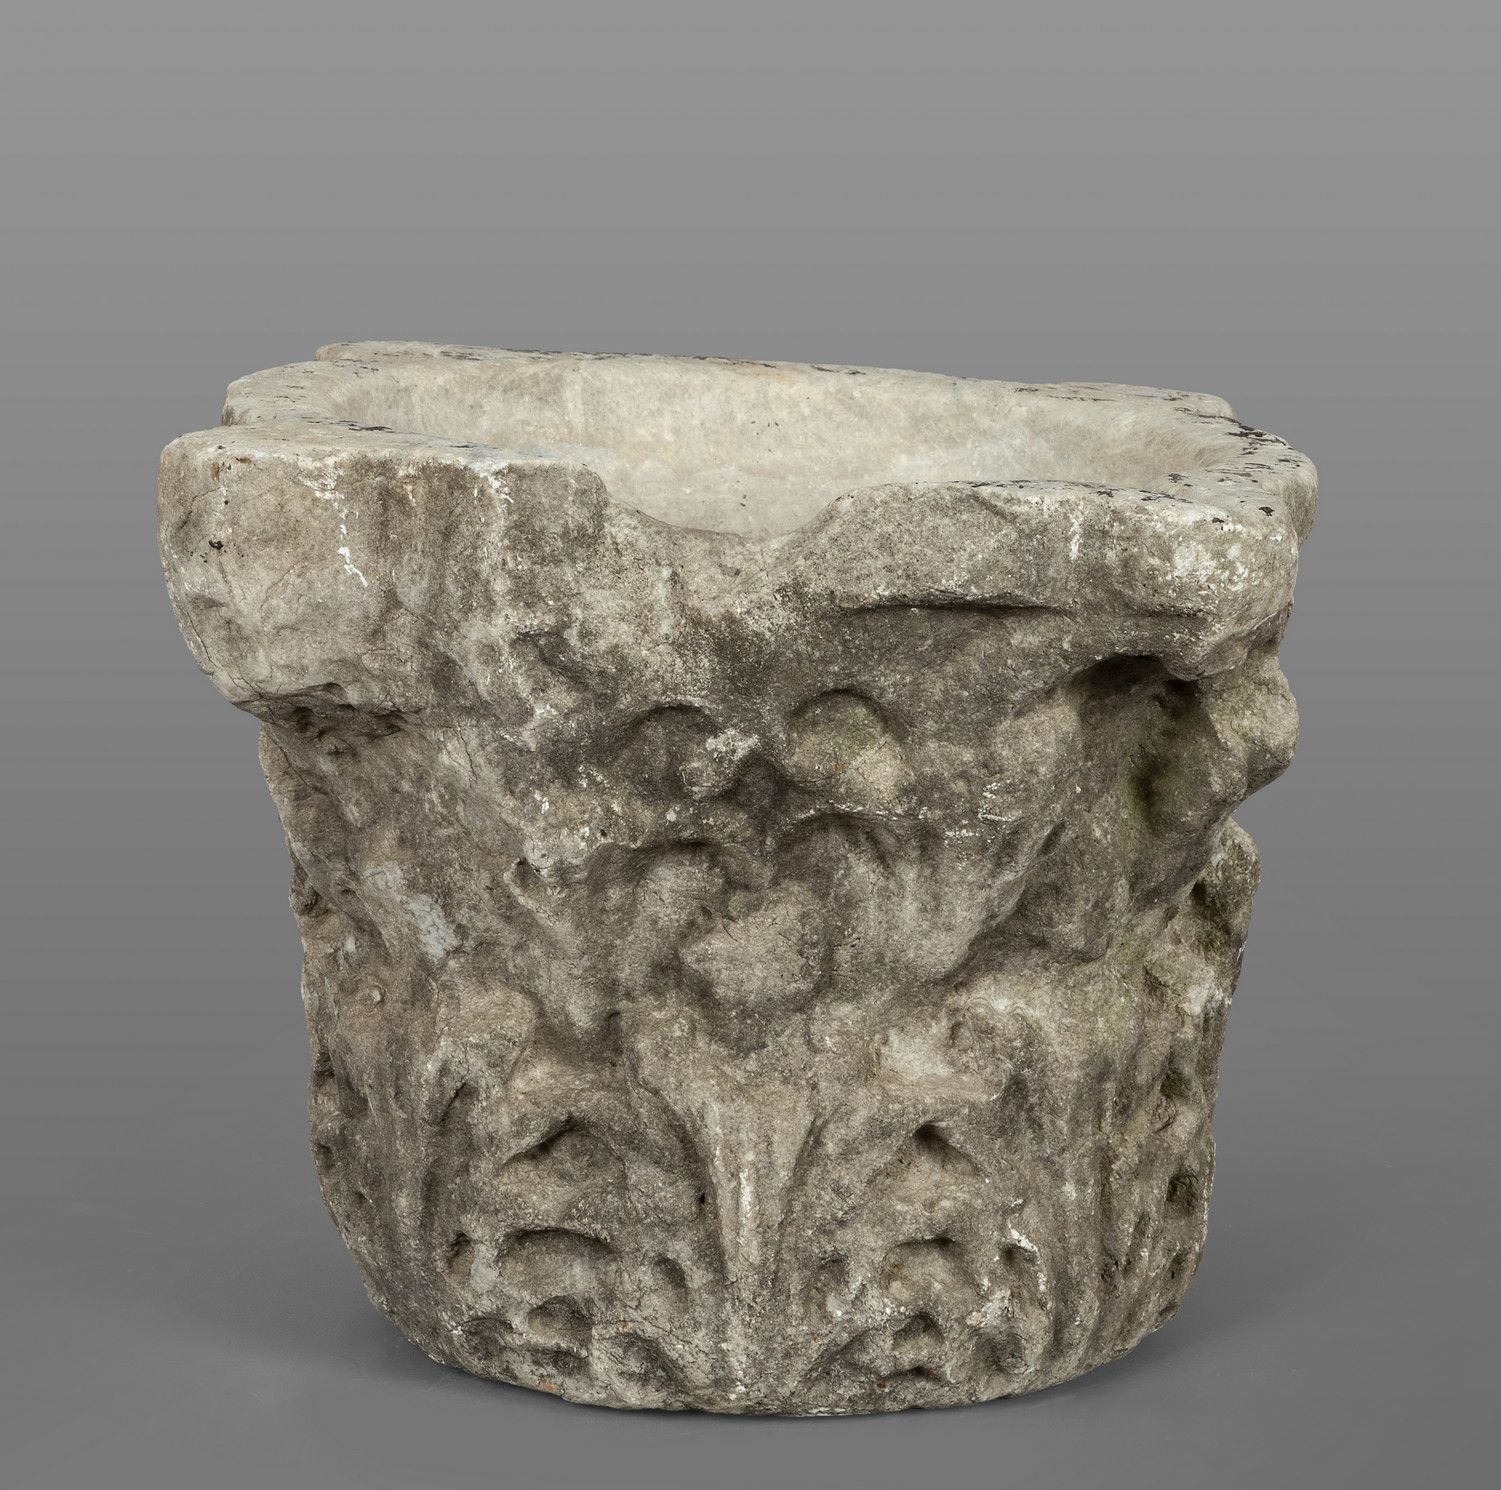 Antico capitello in marmo, trasformato in Antikes Marmorkapitell, umgewandelt in&hellip;